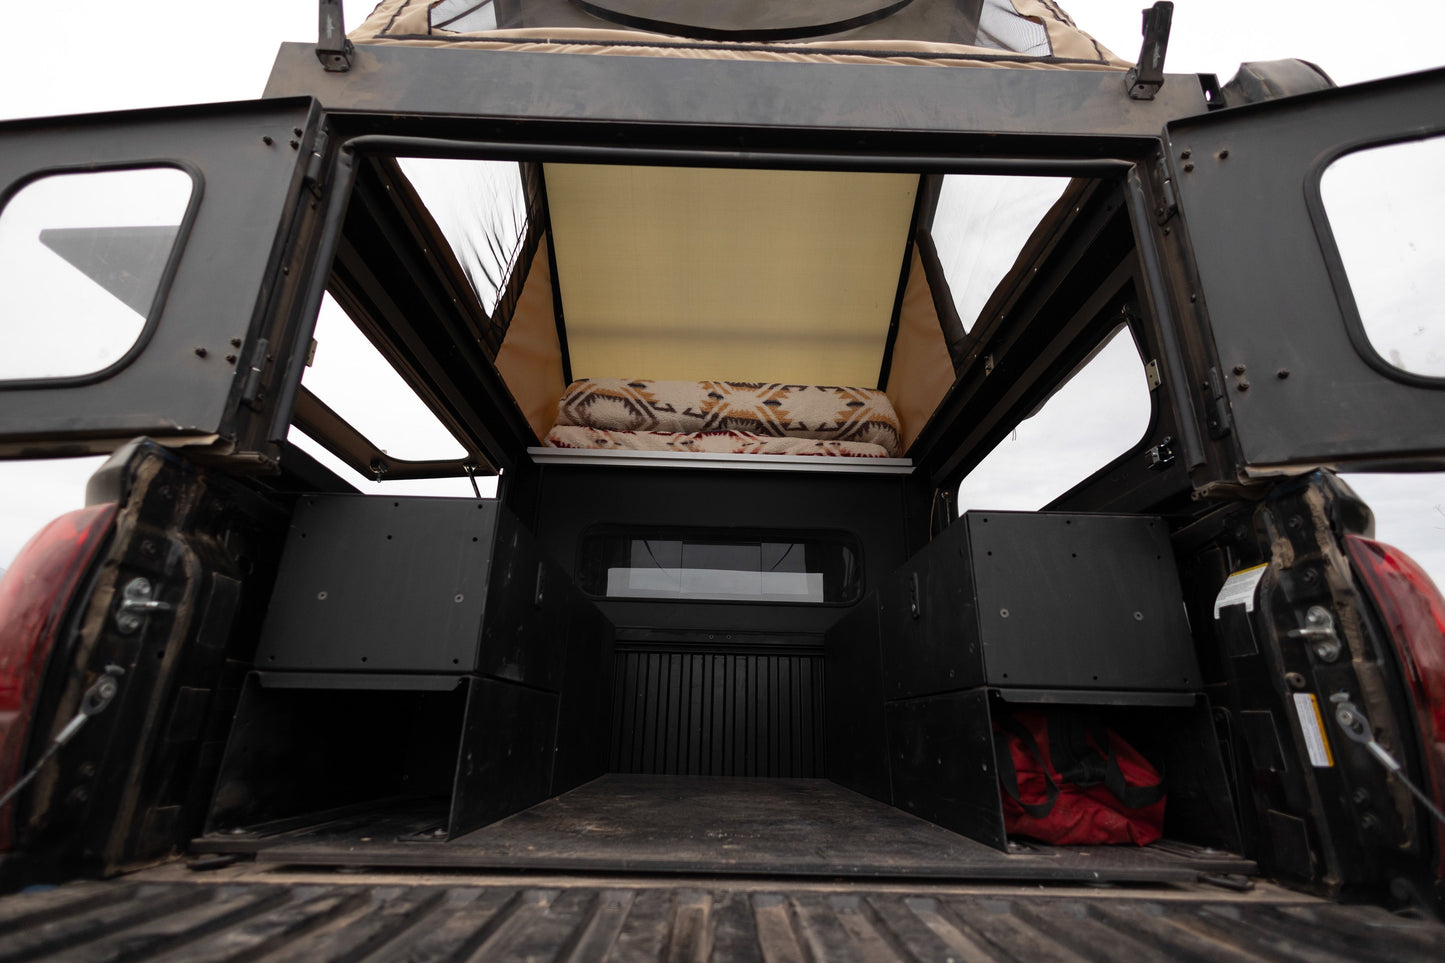 Midsize 6ft Truck Camper Interior